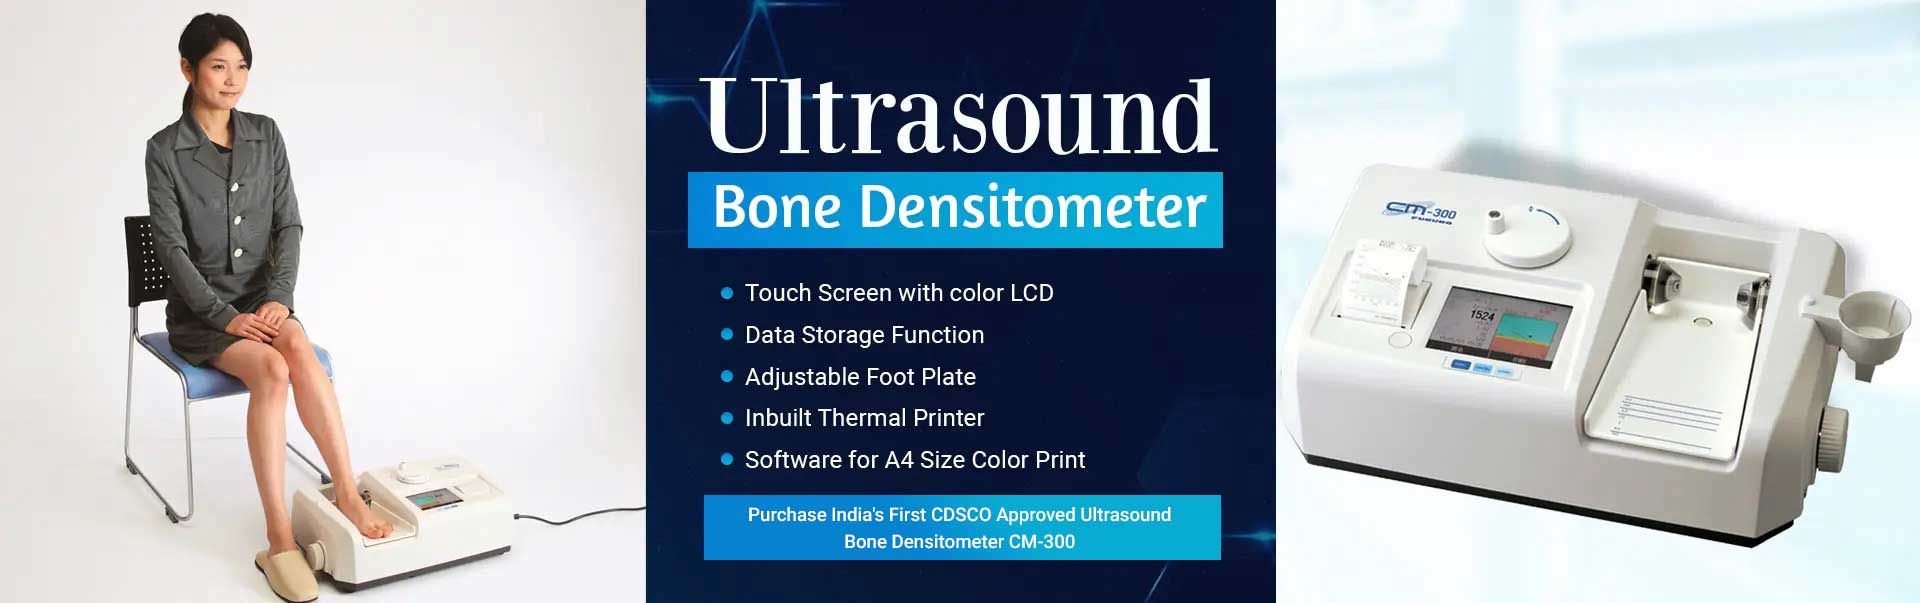 Ultrasound Bone Densitometer Manufacturers in India